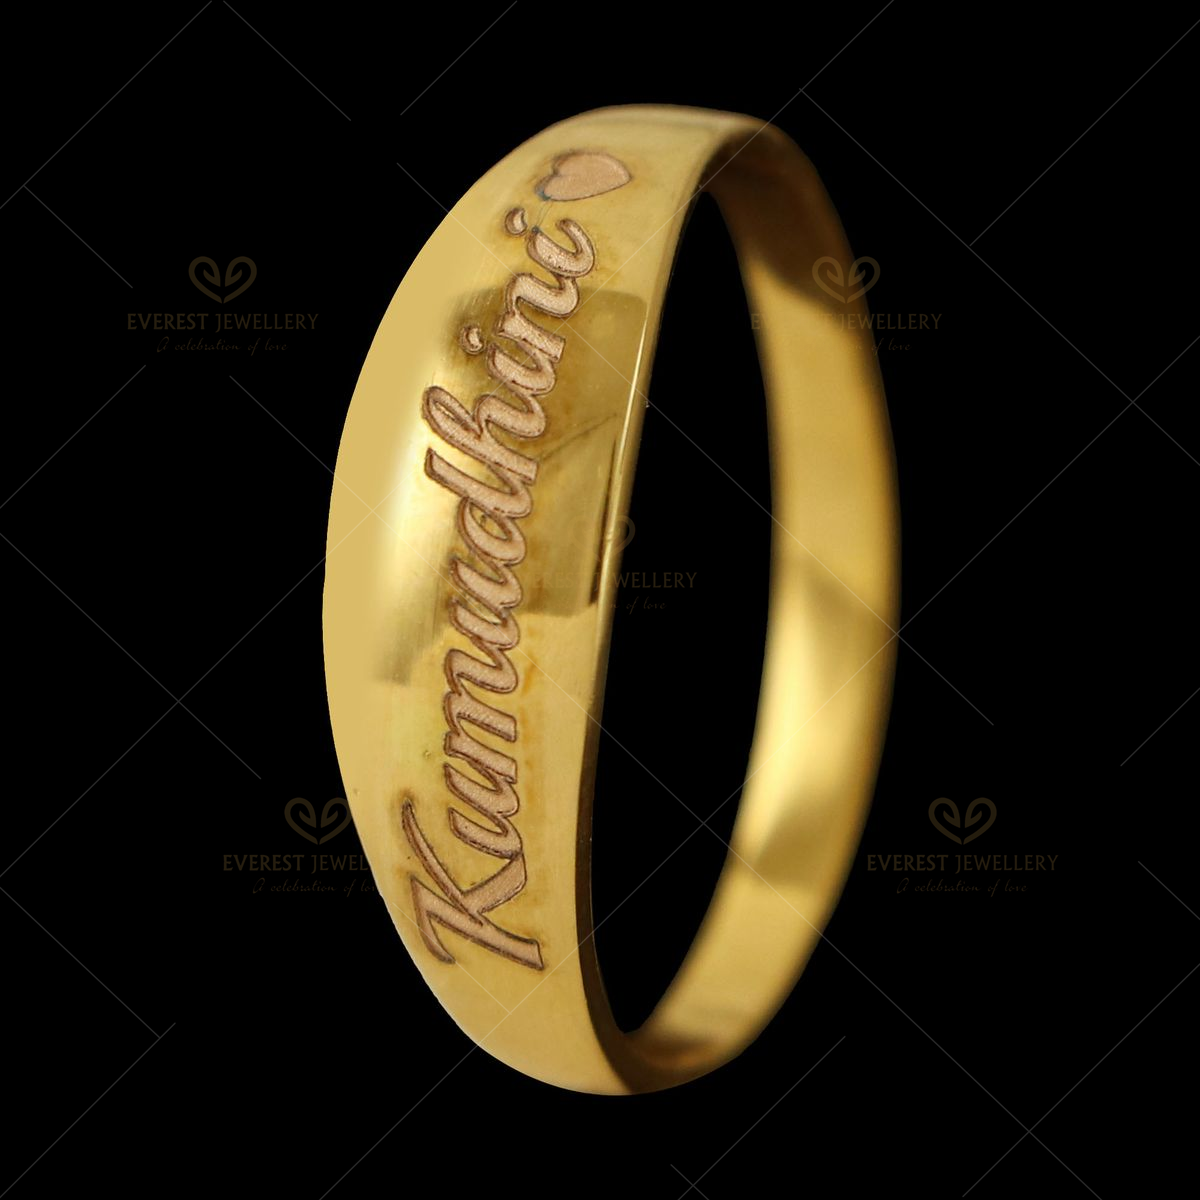 22 kt gold gents wedding ring